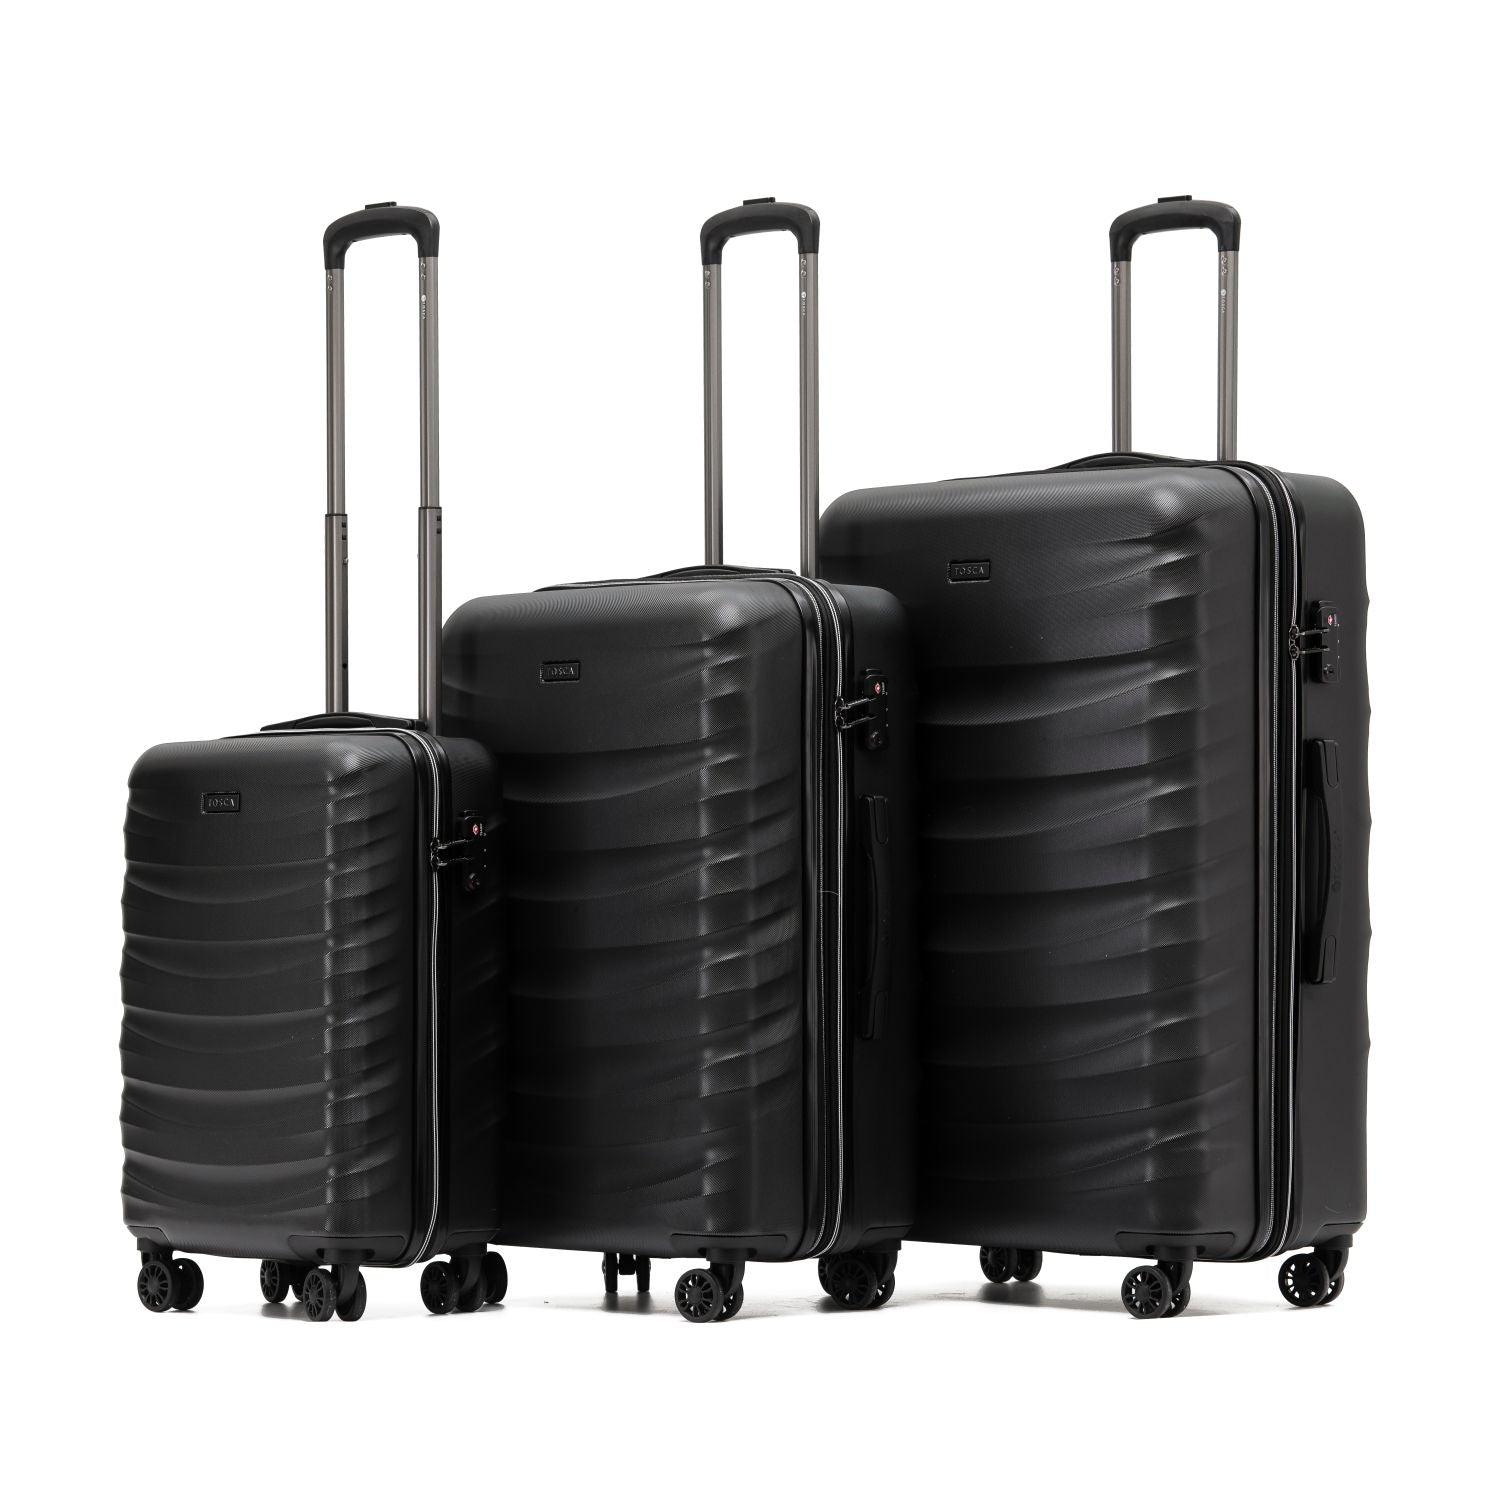 Tosca - Intersteller set of 3 suitcases - Black